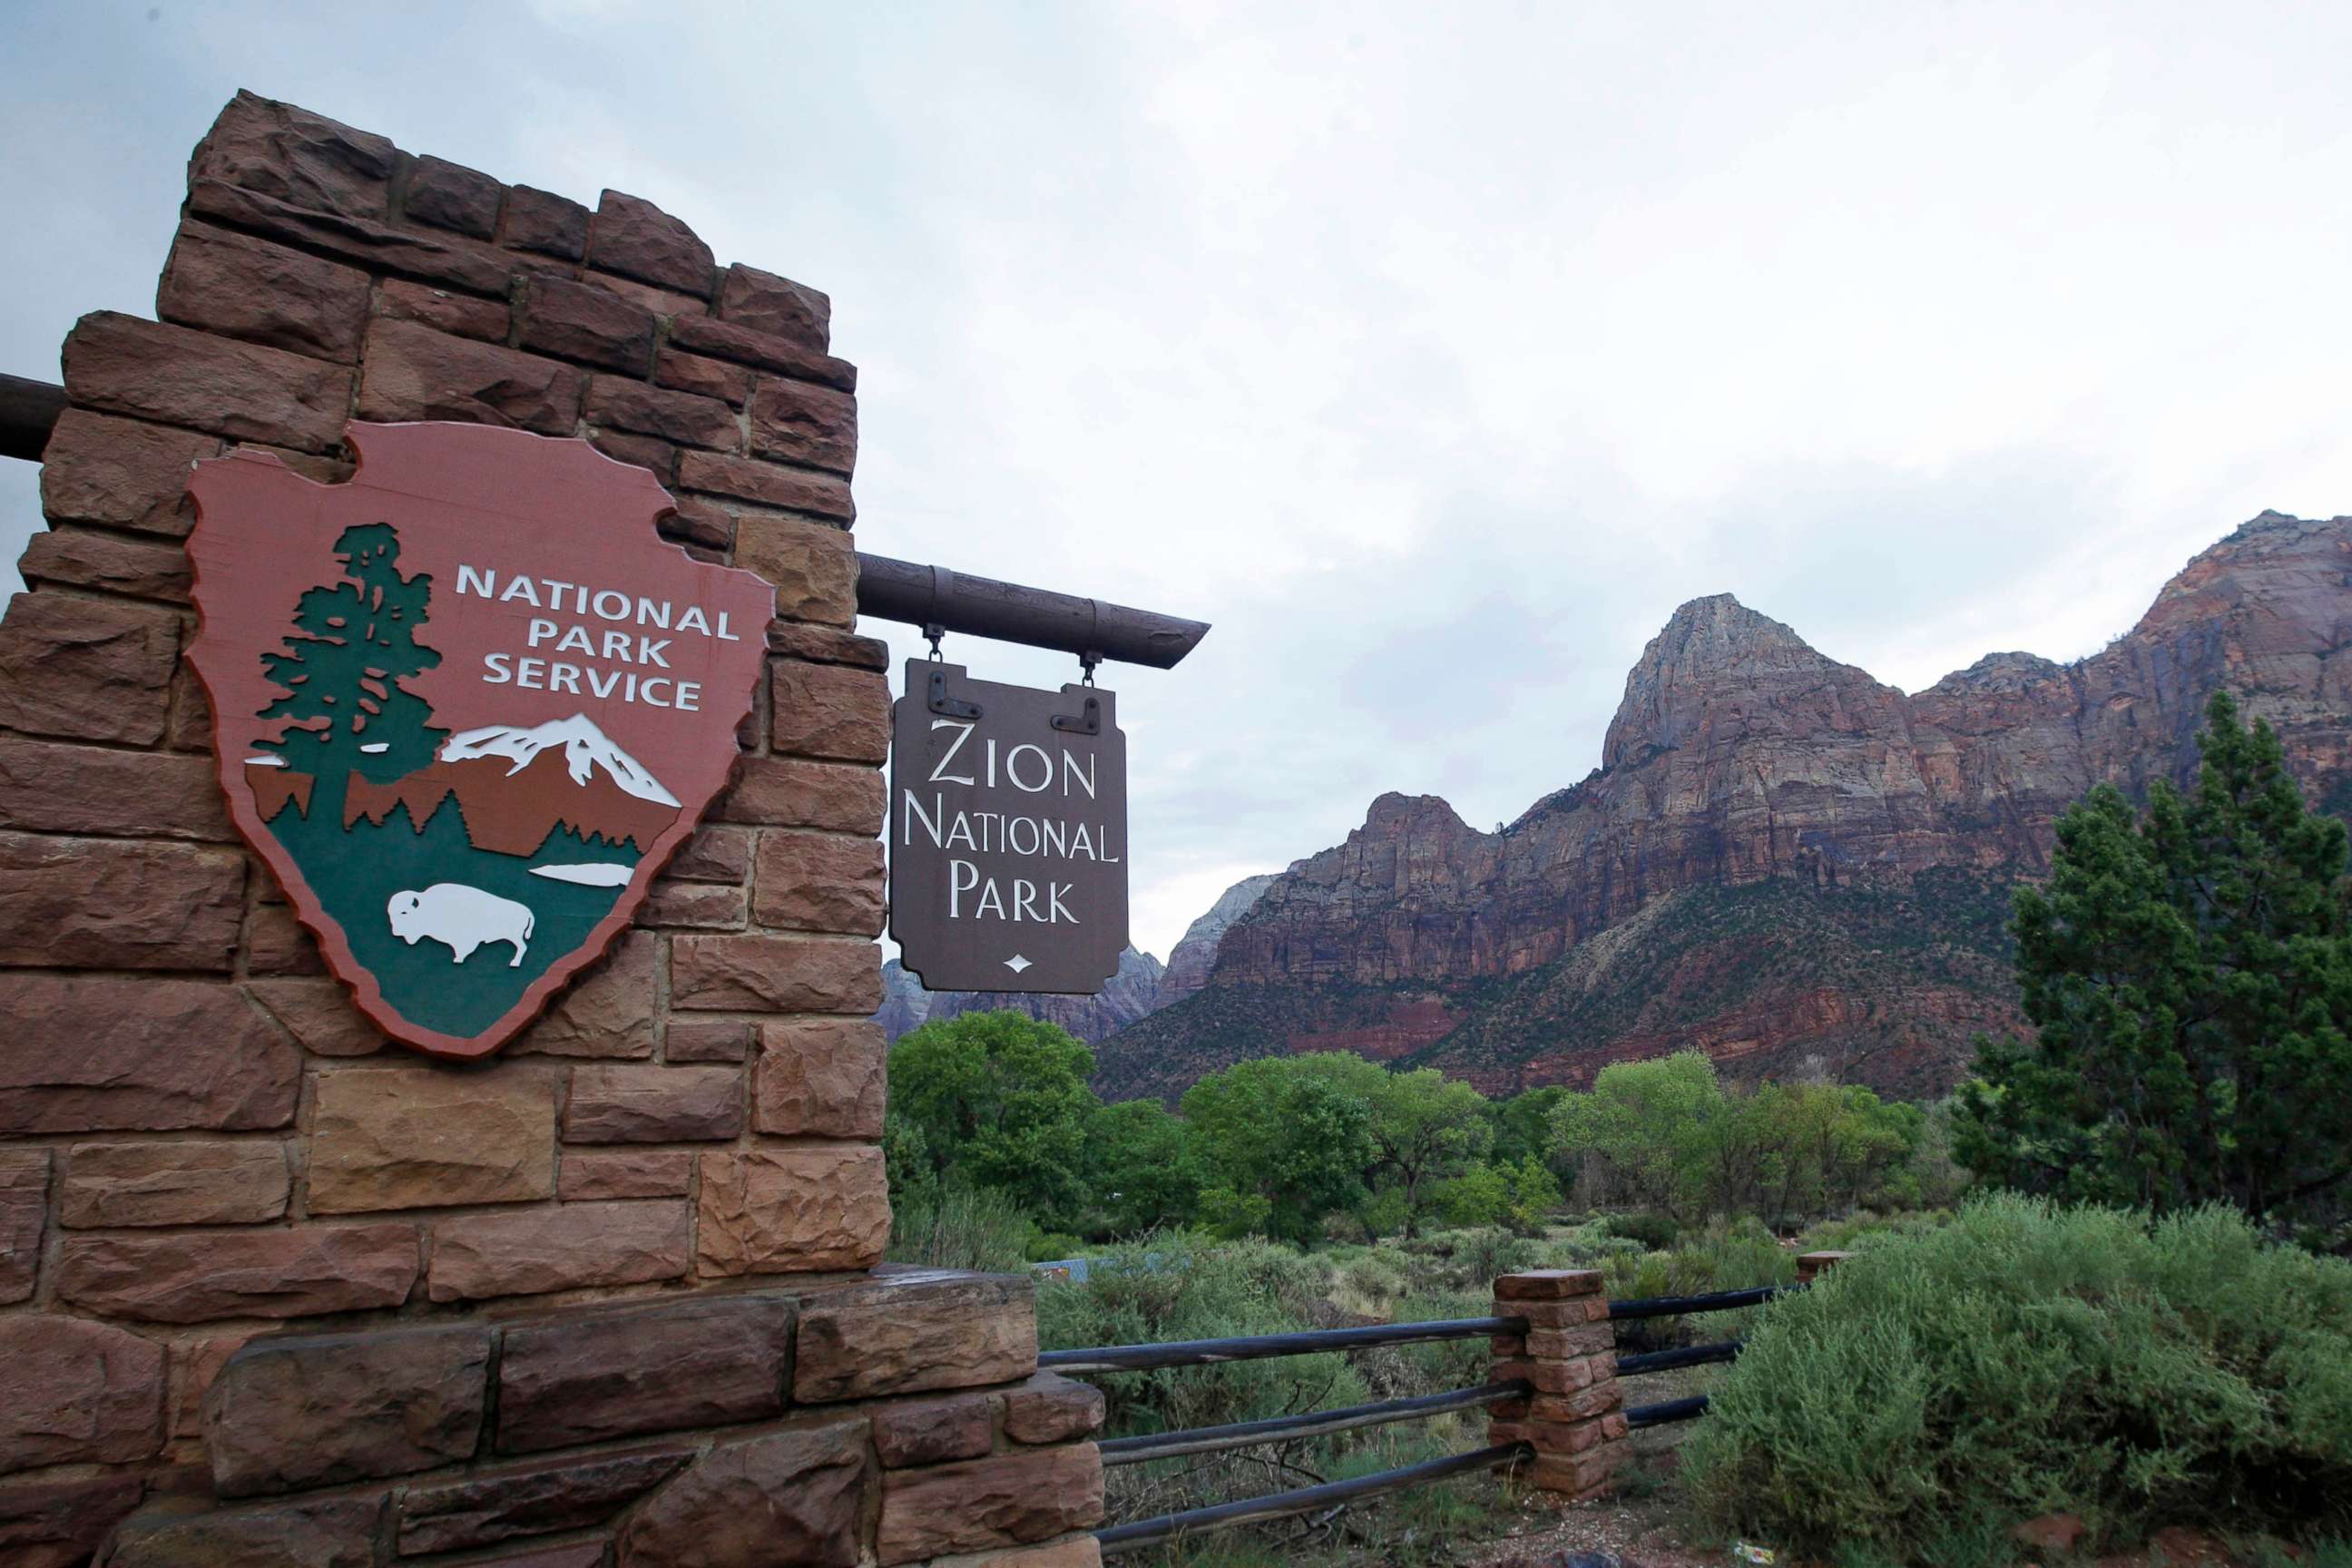 PHOTO: Signing marks an entrance into Zion National Park near Springdale, Utah, Sept. 15, 2015.